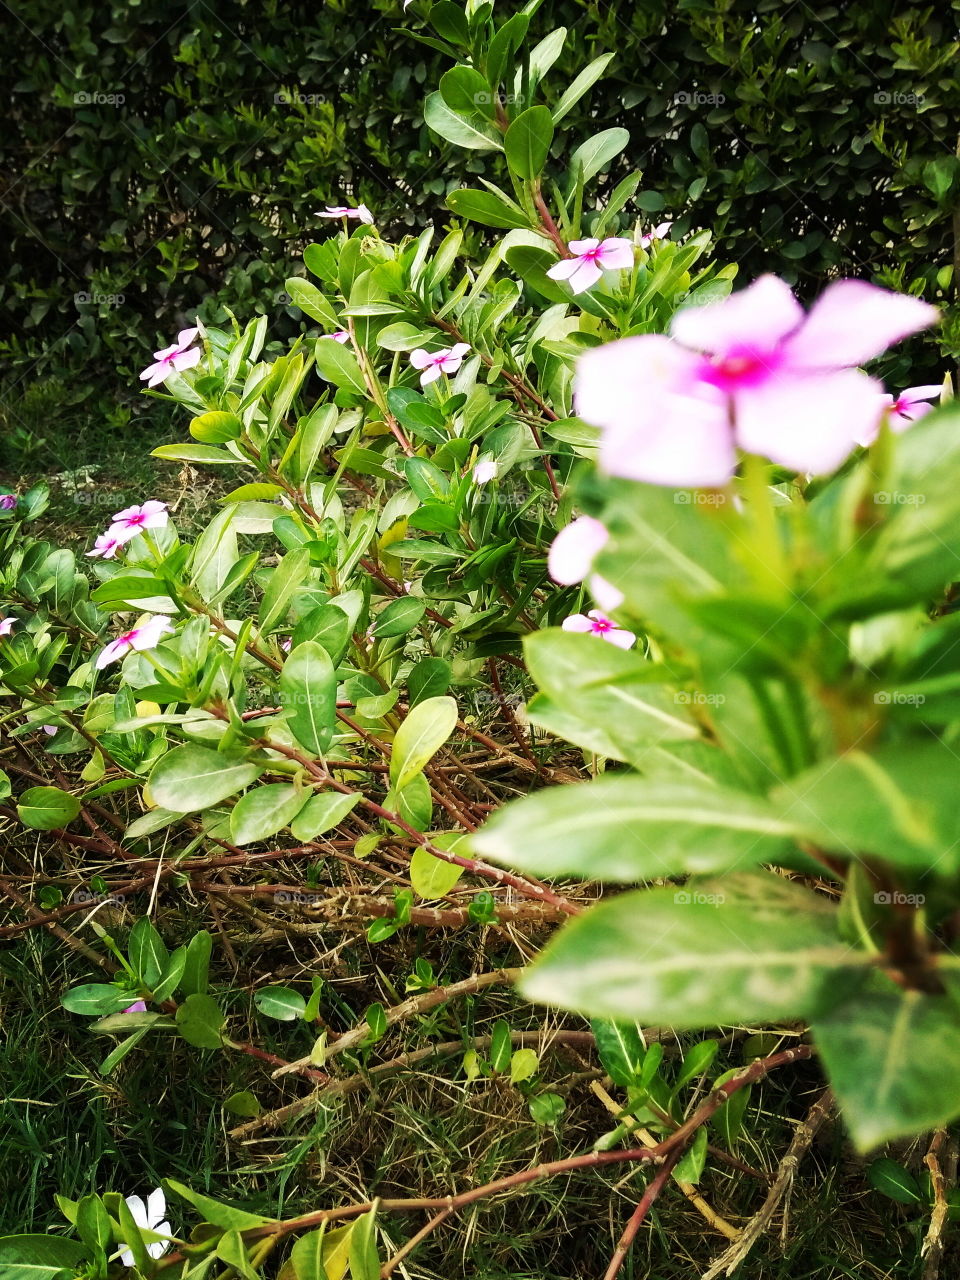 flower plants